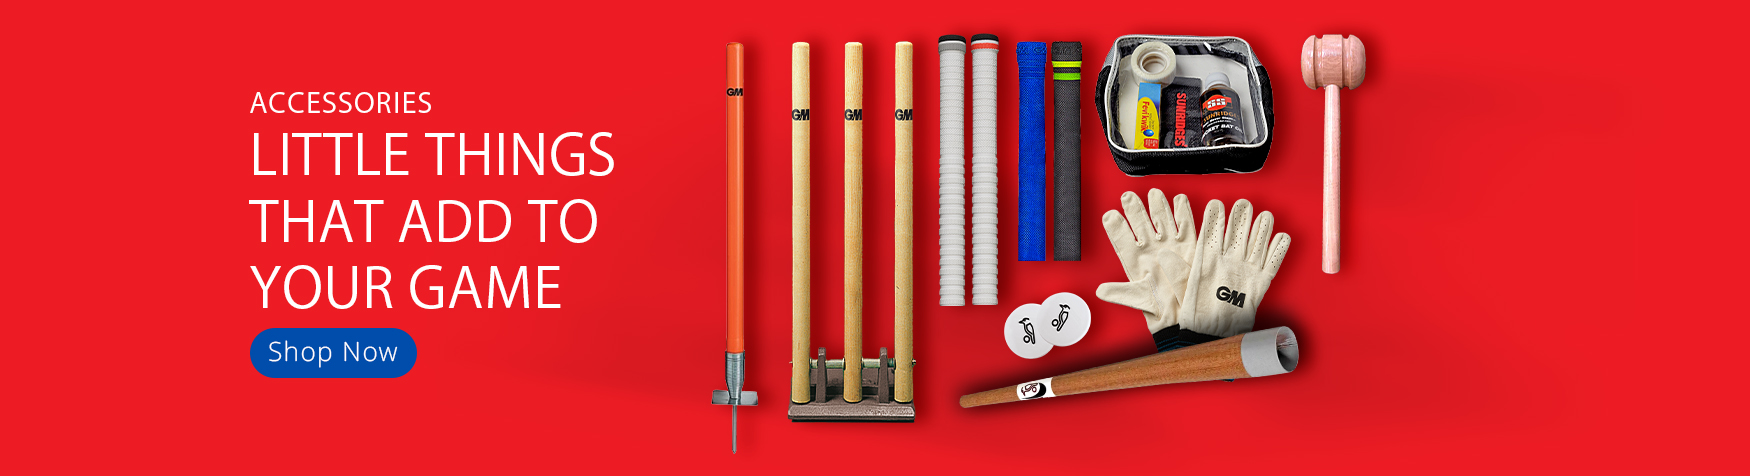 Cricket Accessories & Equipment